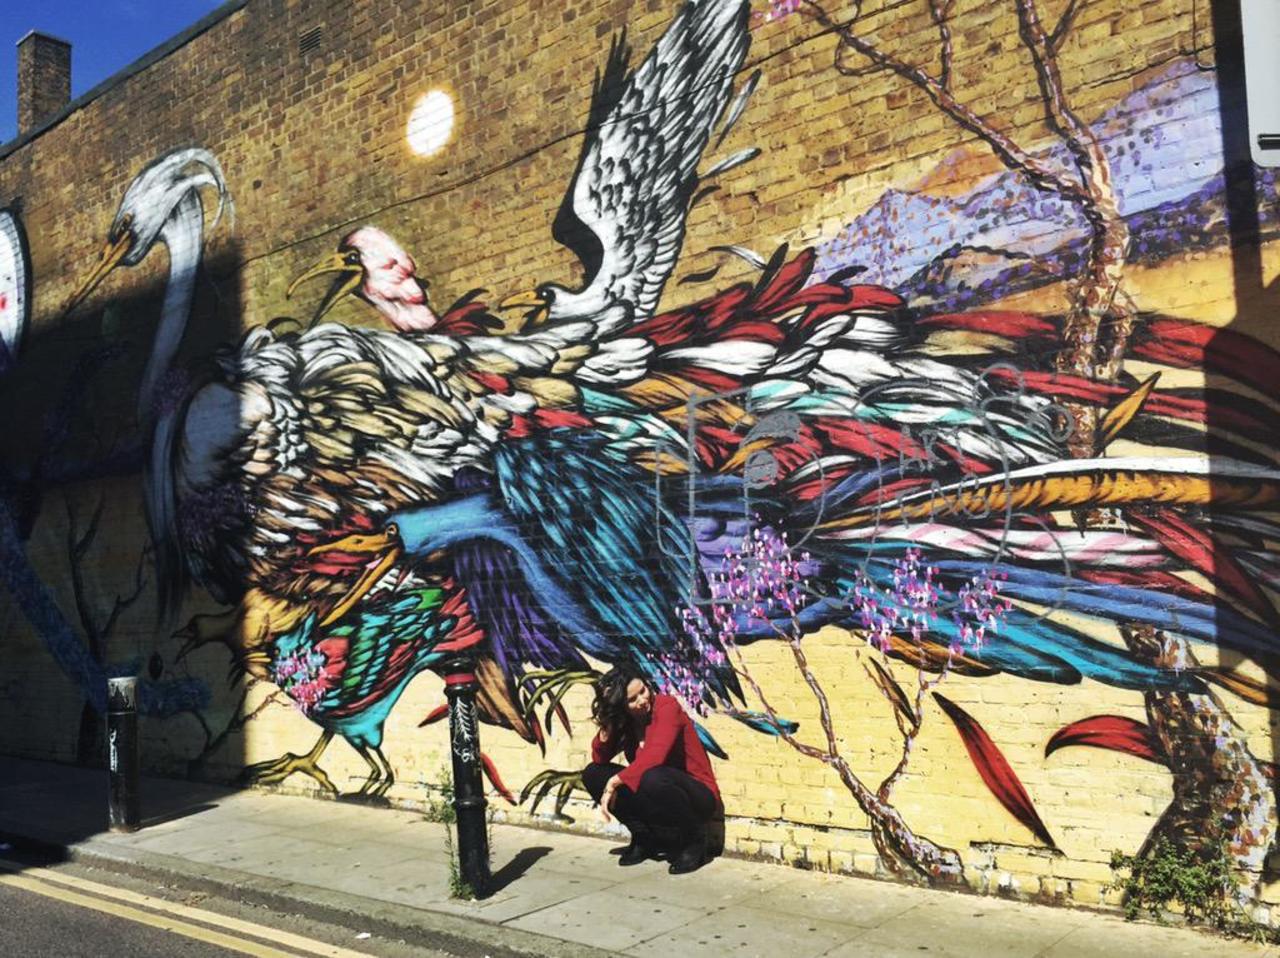 Shoreditch. London. #art #love #graffiti #setlife #beauty #guilt #abcfamily #lionsgate http://t.co/pFJ1adHJD0